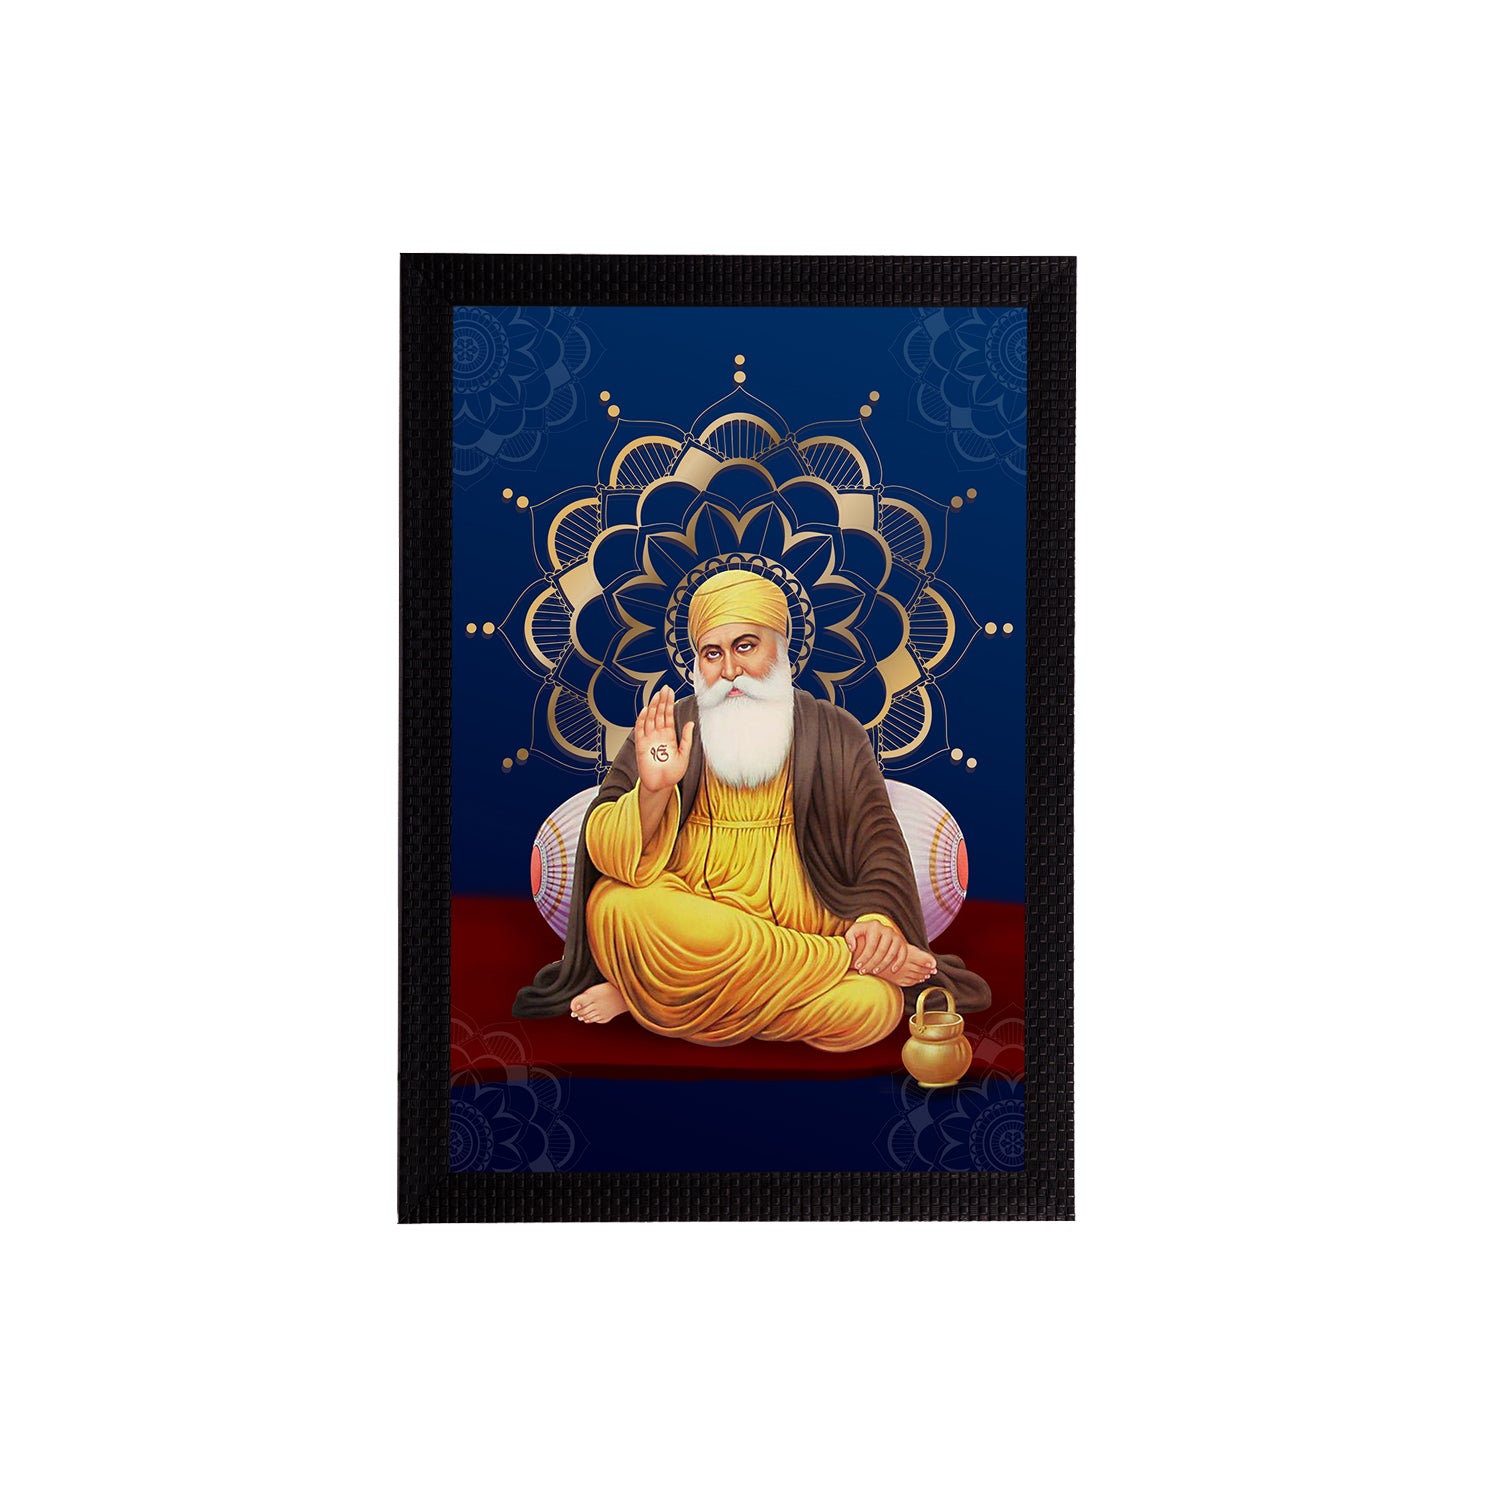 Shri Guru Nanak Dev Ji Painting Digital Printed Religious Wall Art